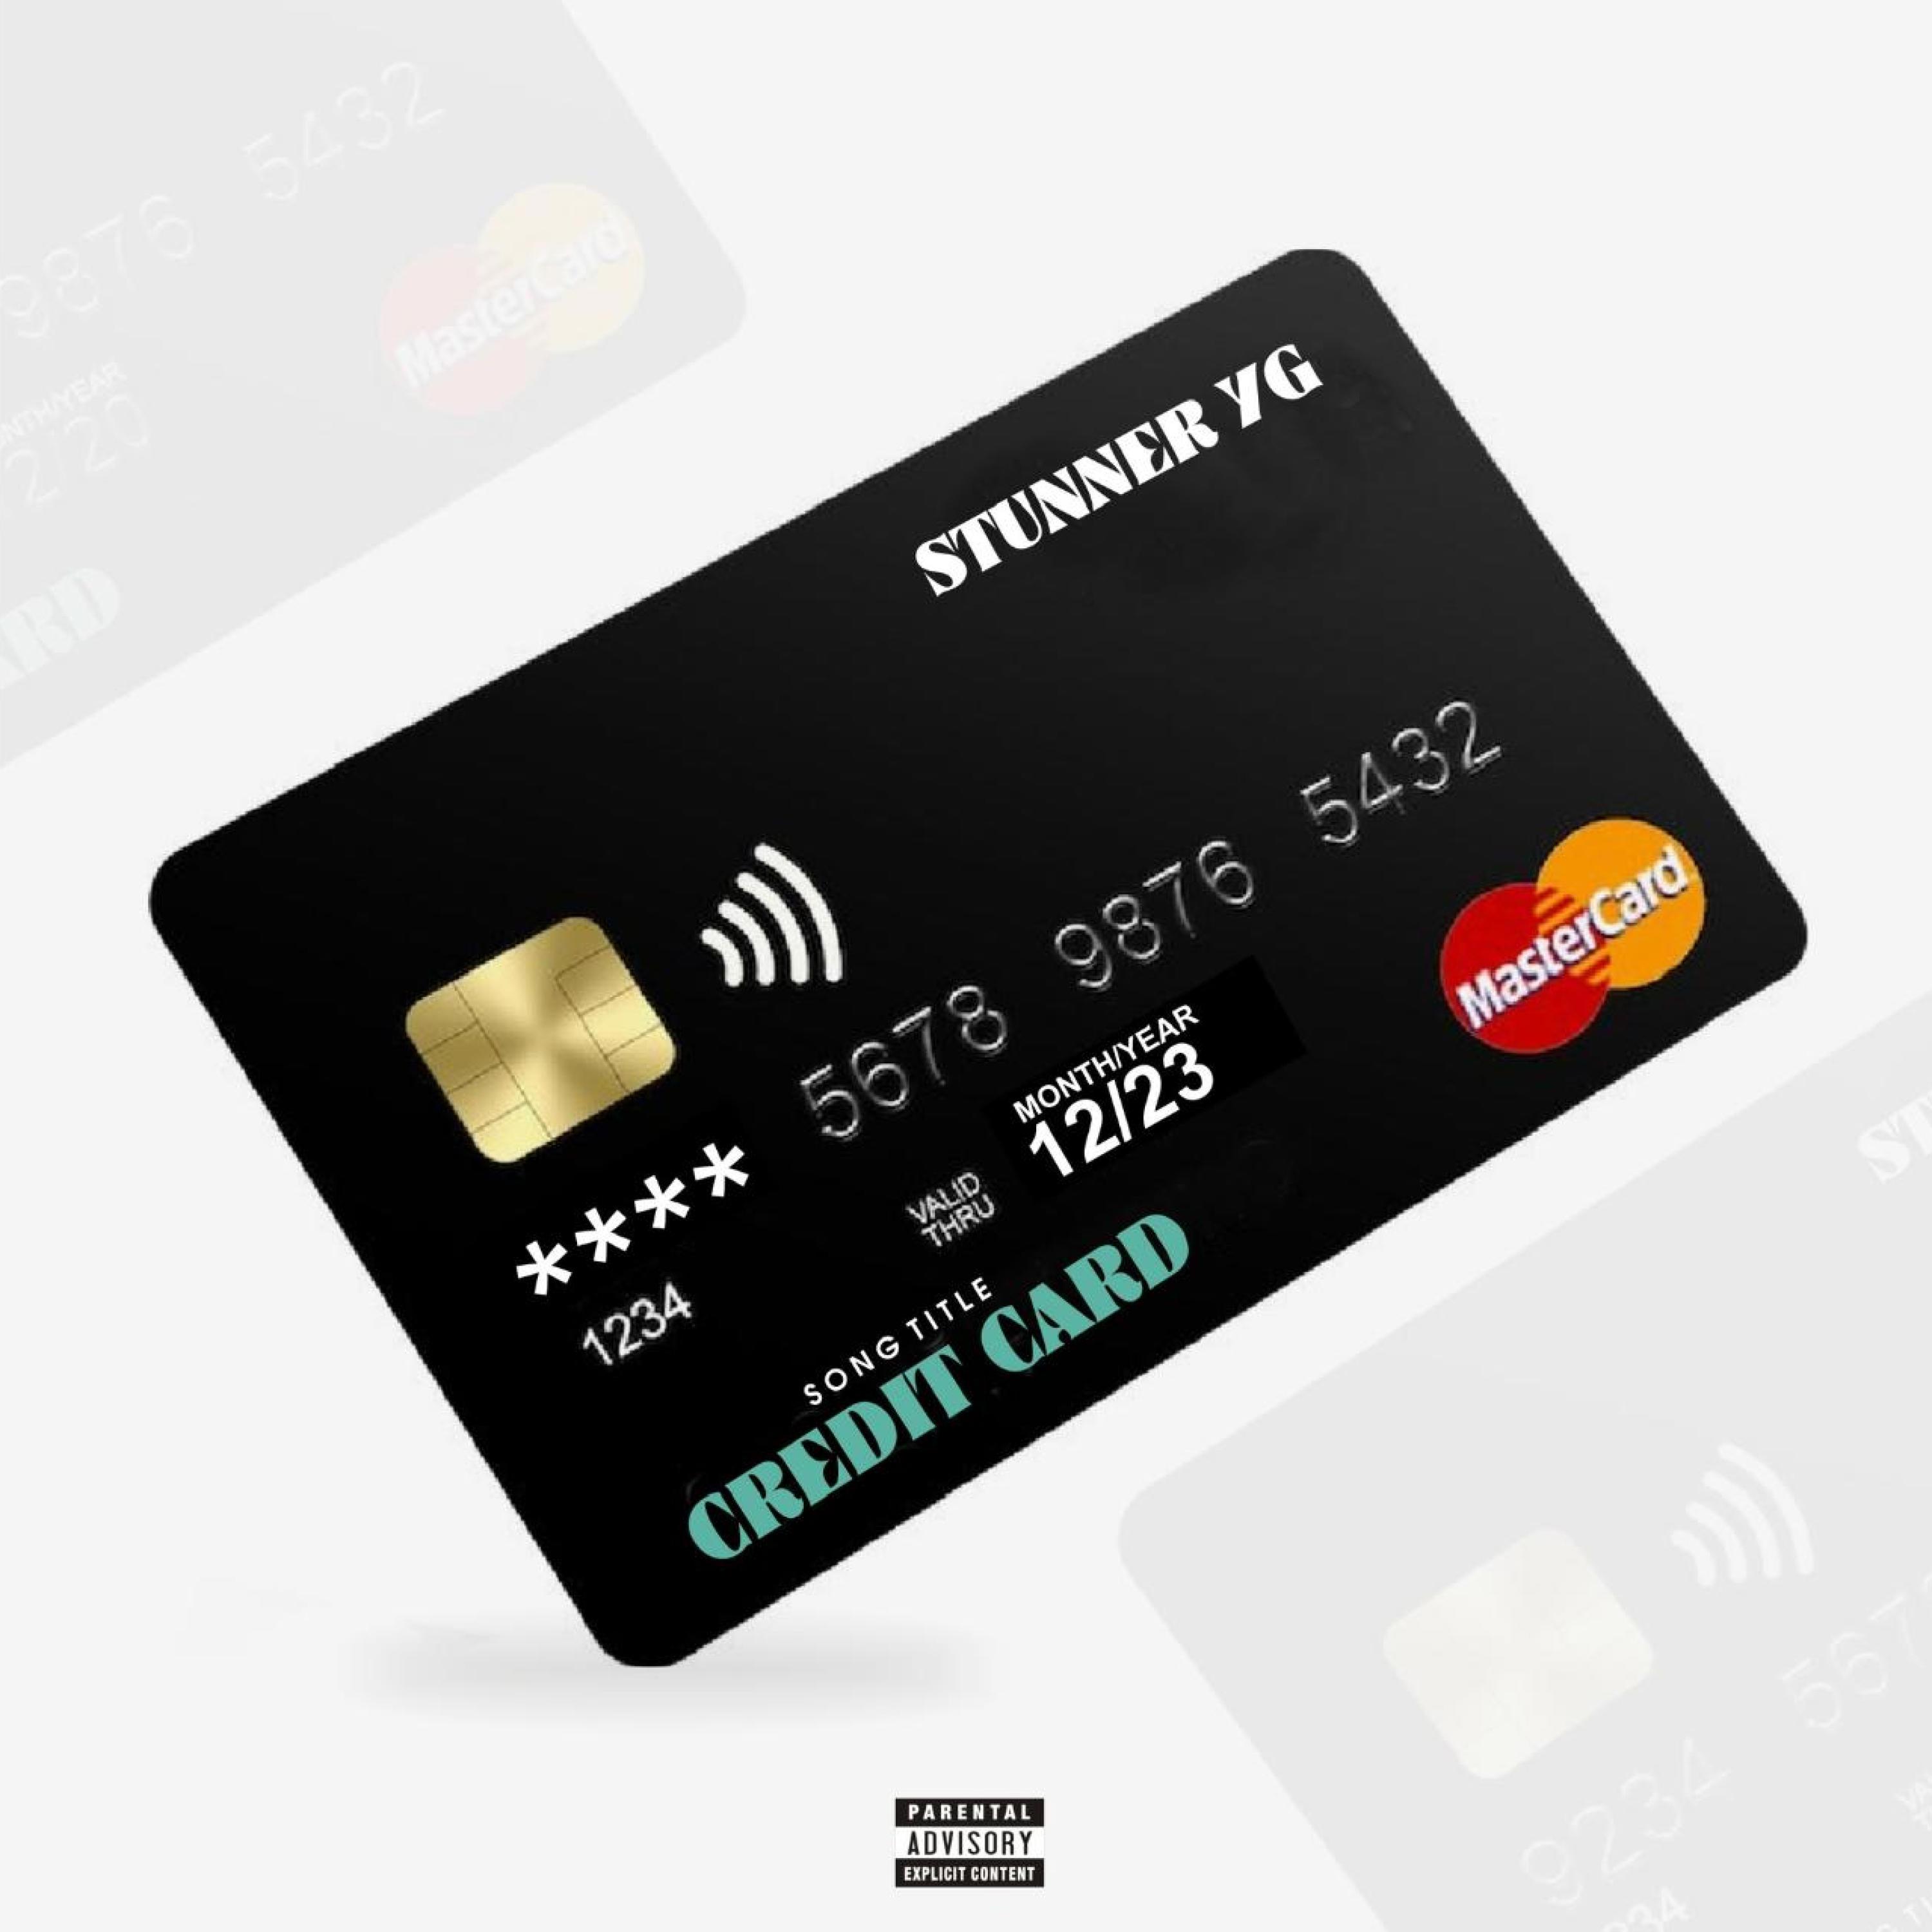 STUNNER - Credit Card